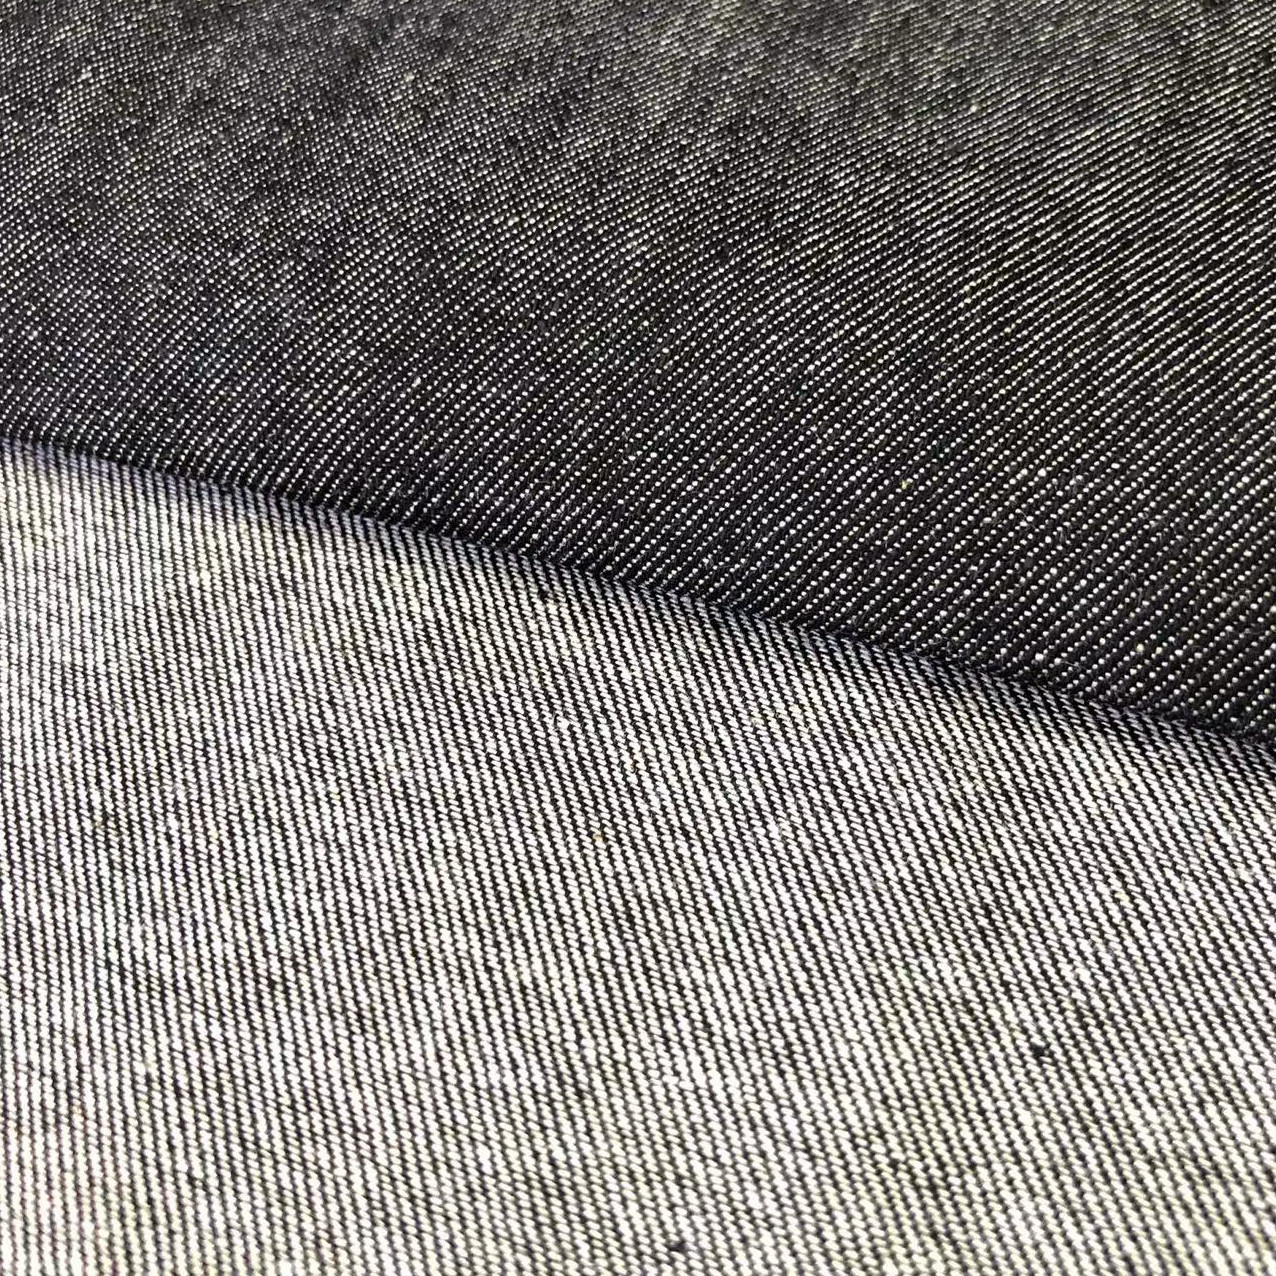 White Denim Fabric Surface Texture Stock Image - Image of denim, clothing:  188292101